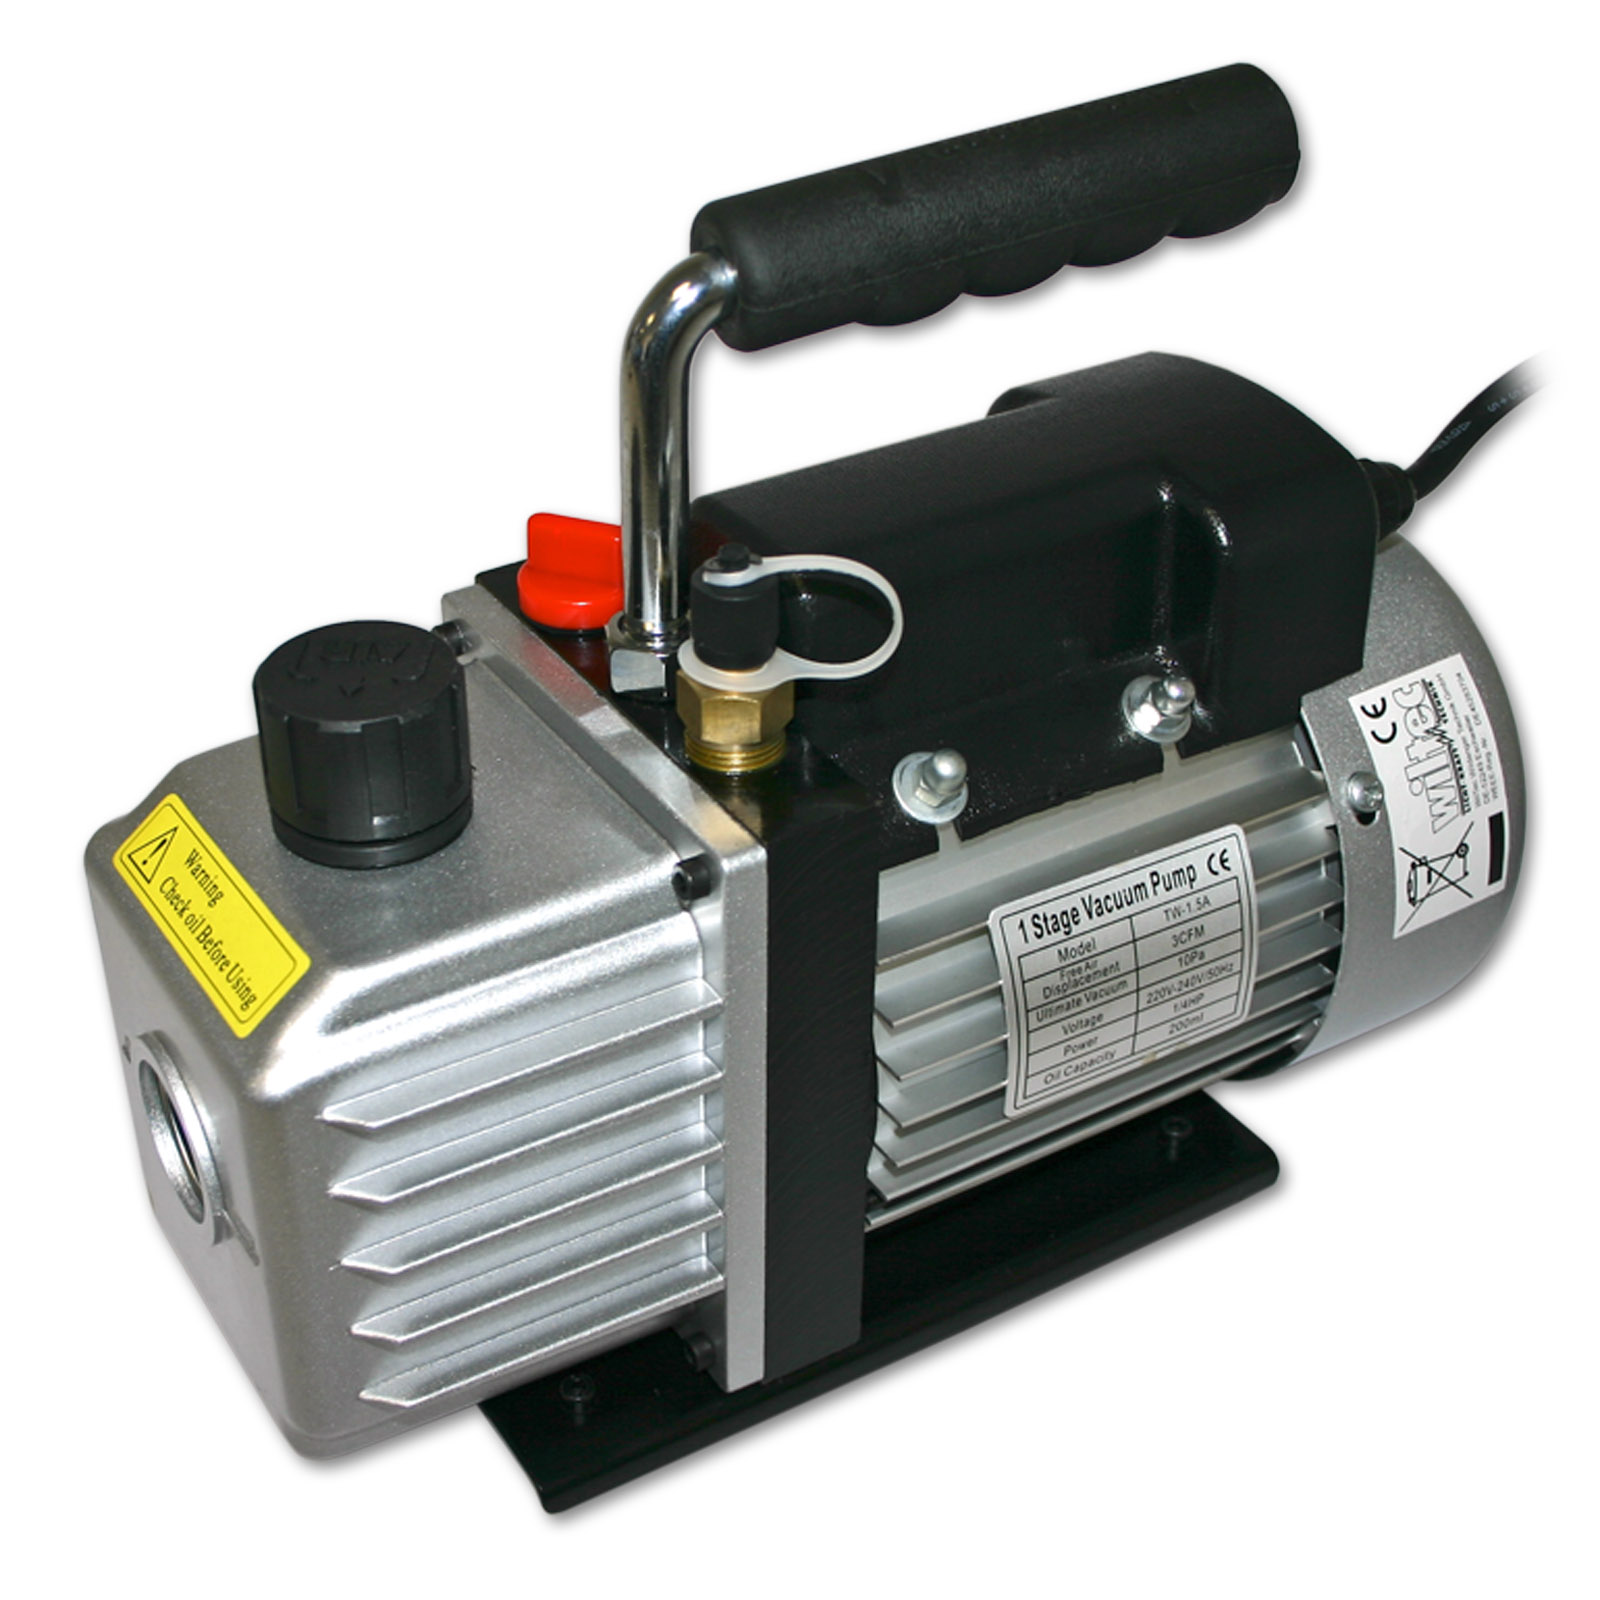 Unterdruckpumpe - Vakuumpumpe Vakuum Pumpe 84l - 3cfm / 10Pa